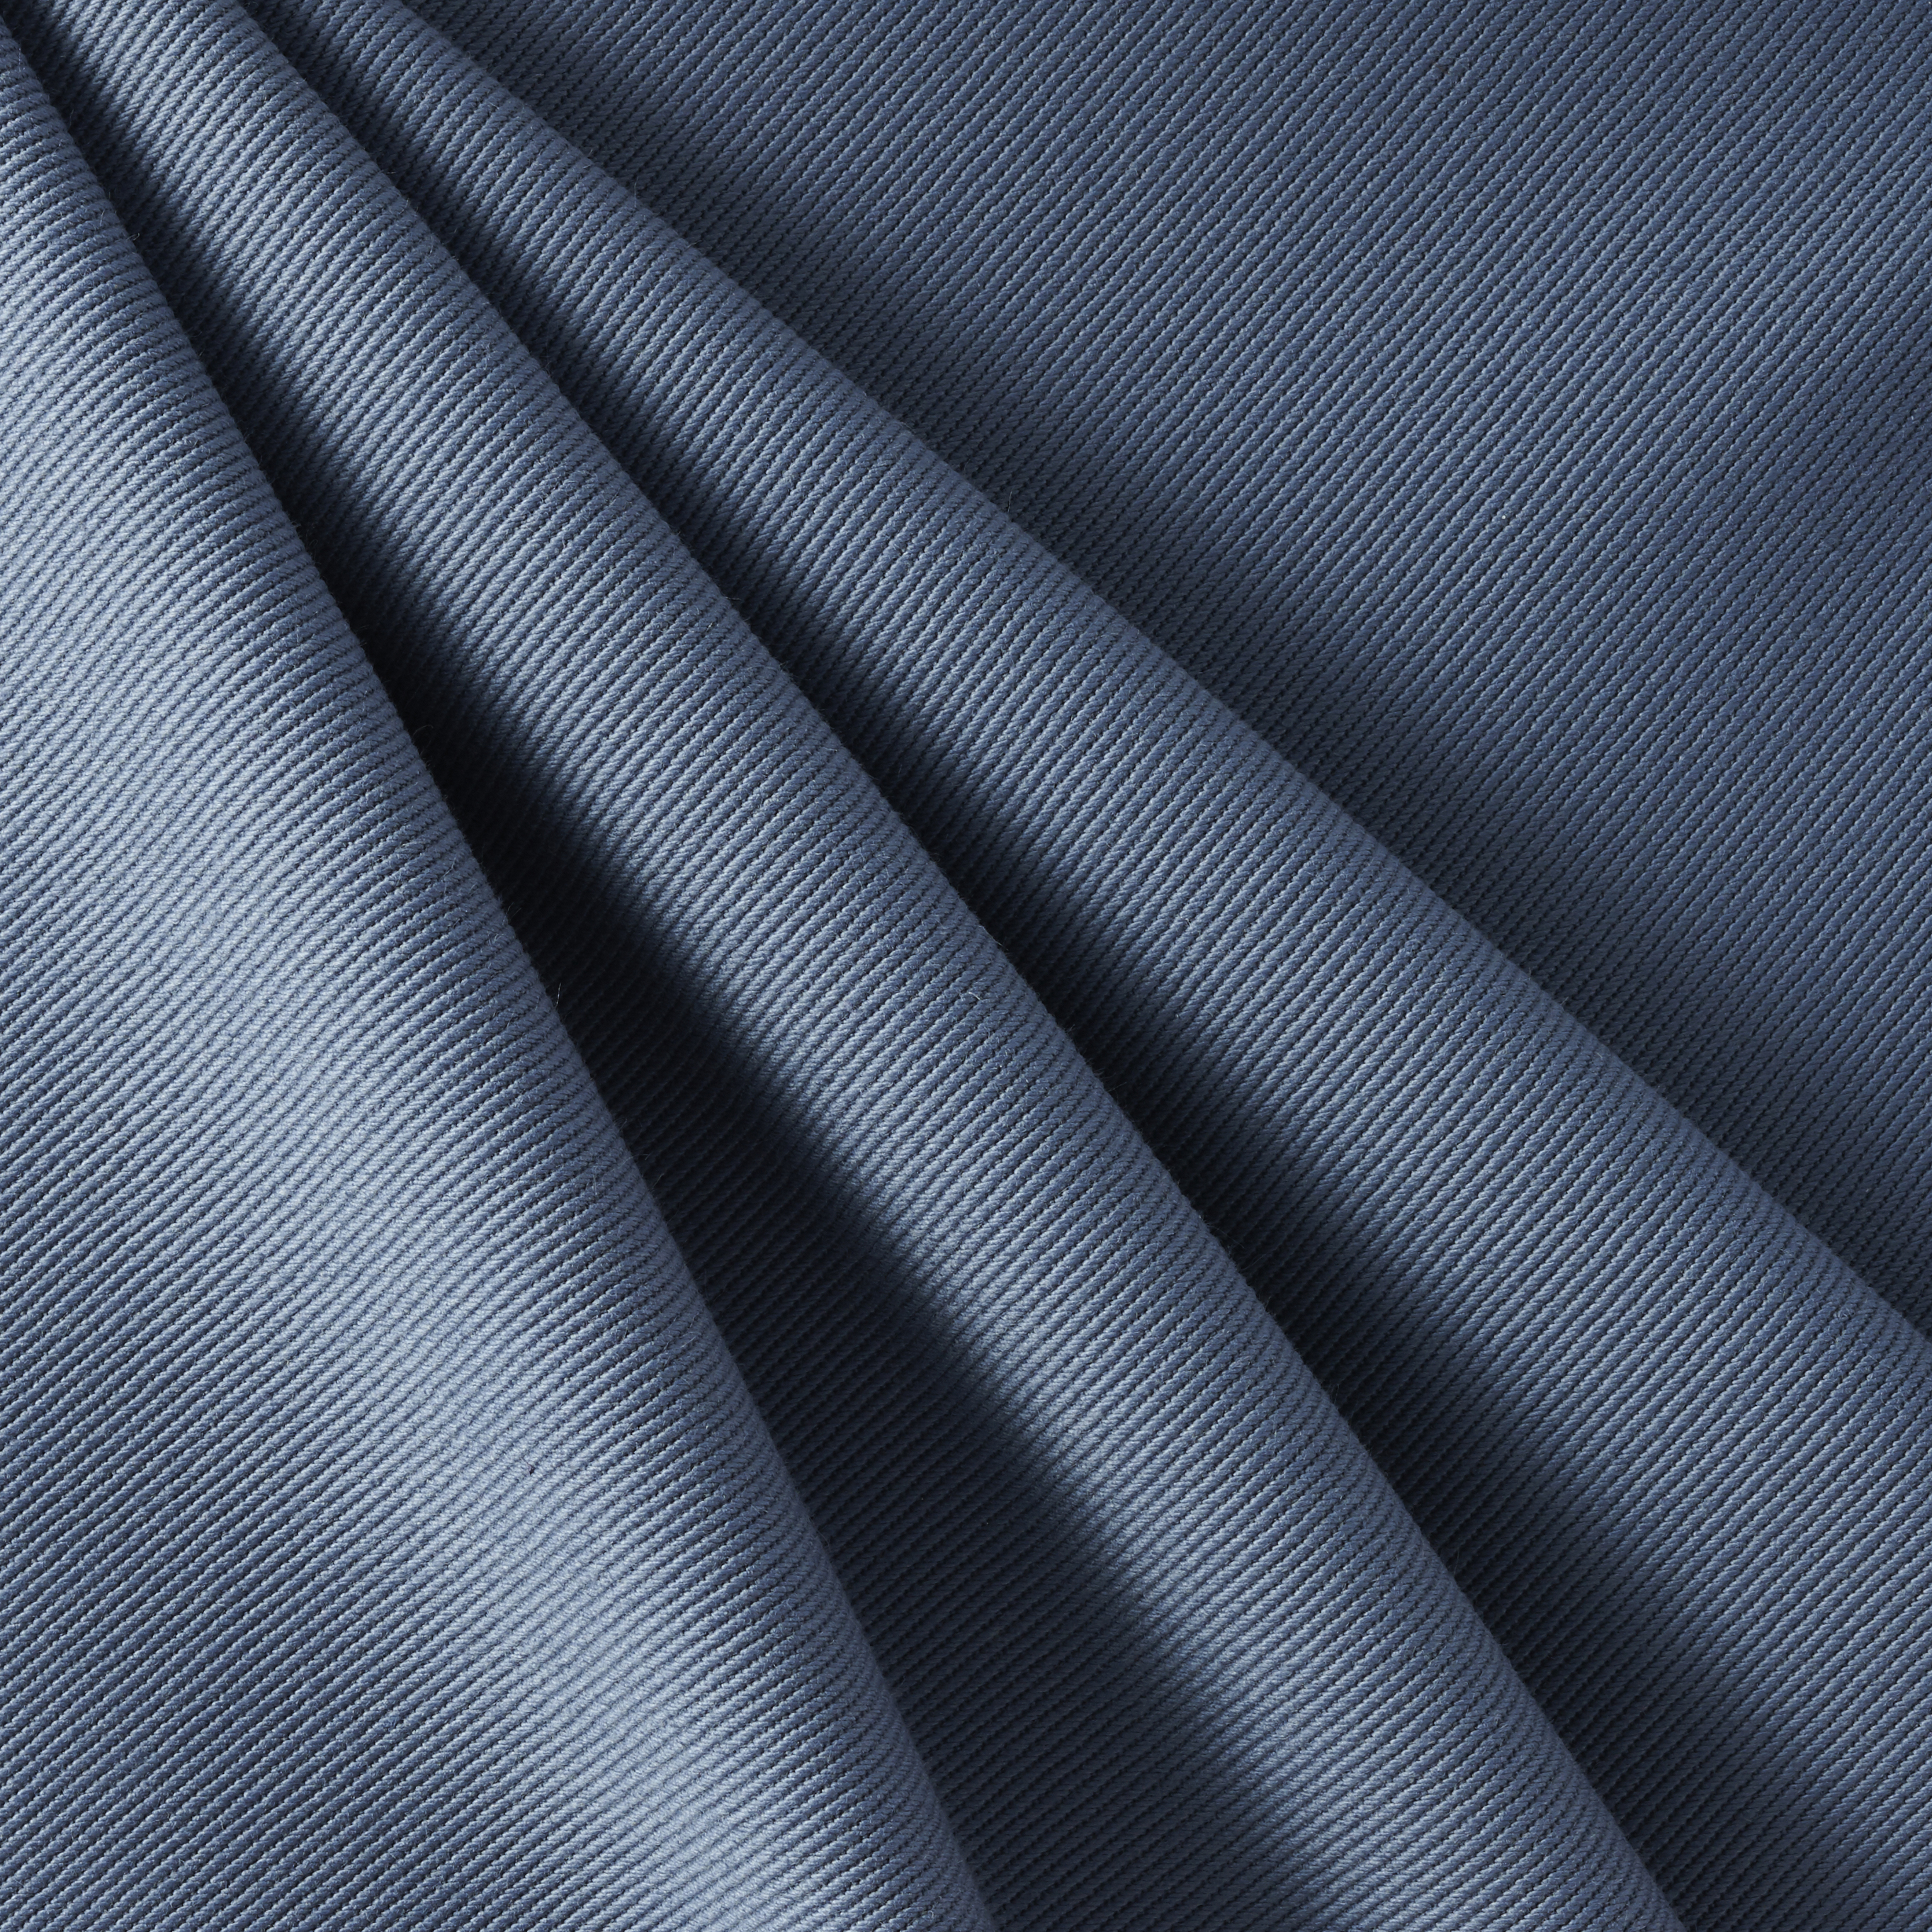 E000 Blue Jean Preshrunk Washed Denim Fabric by The Yard